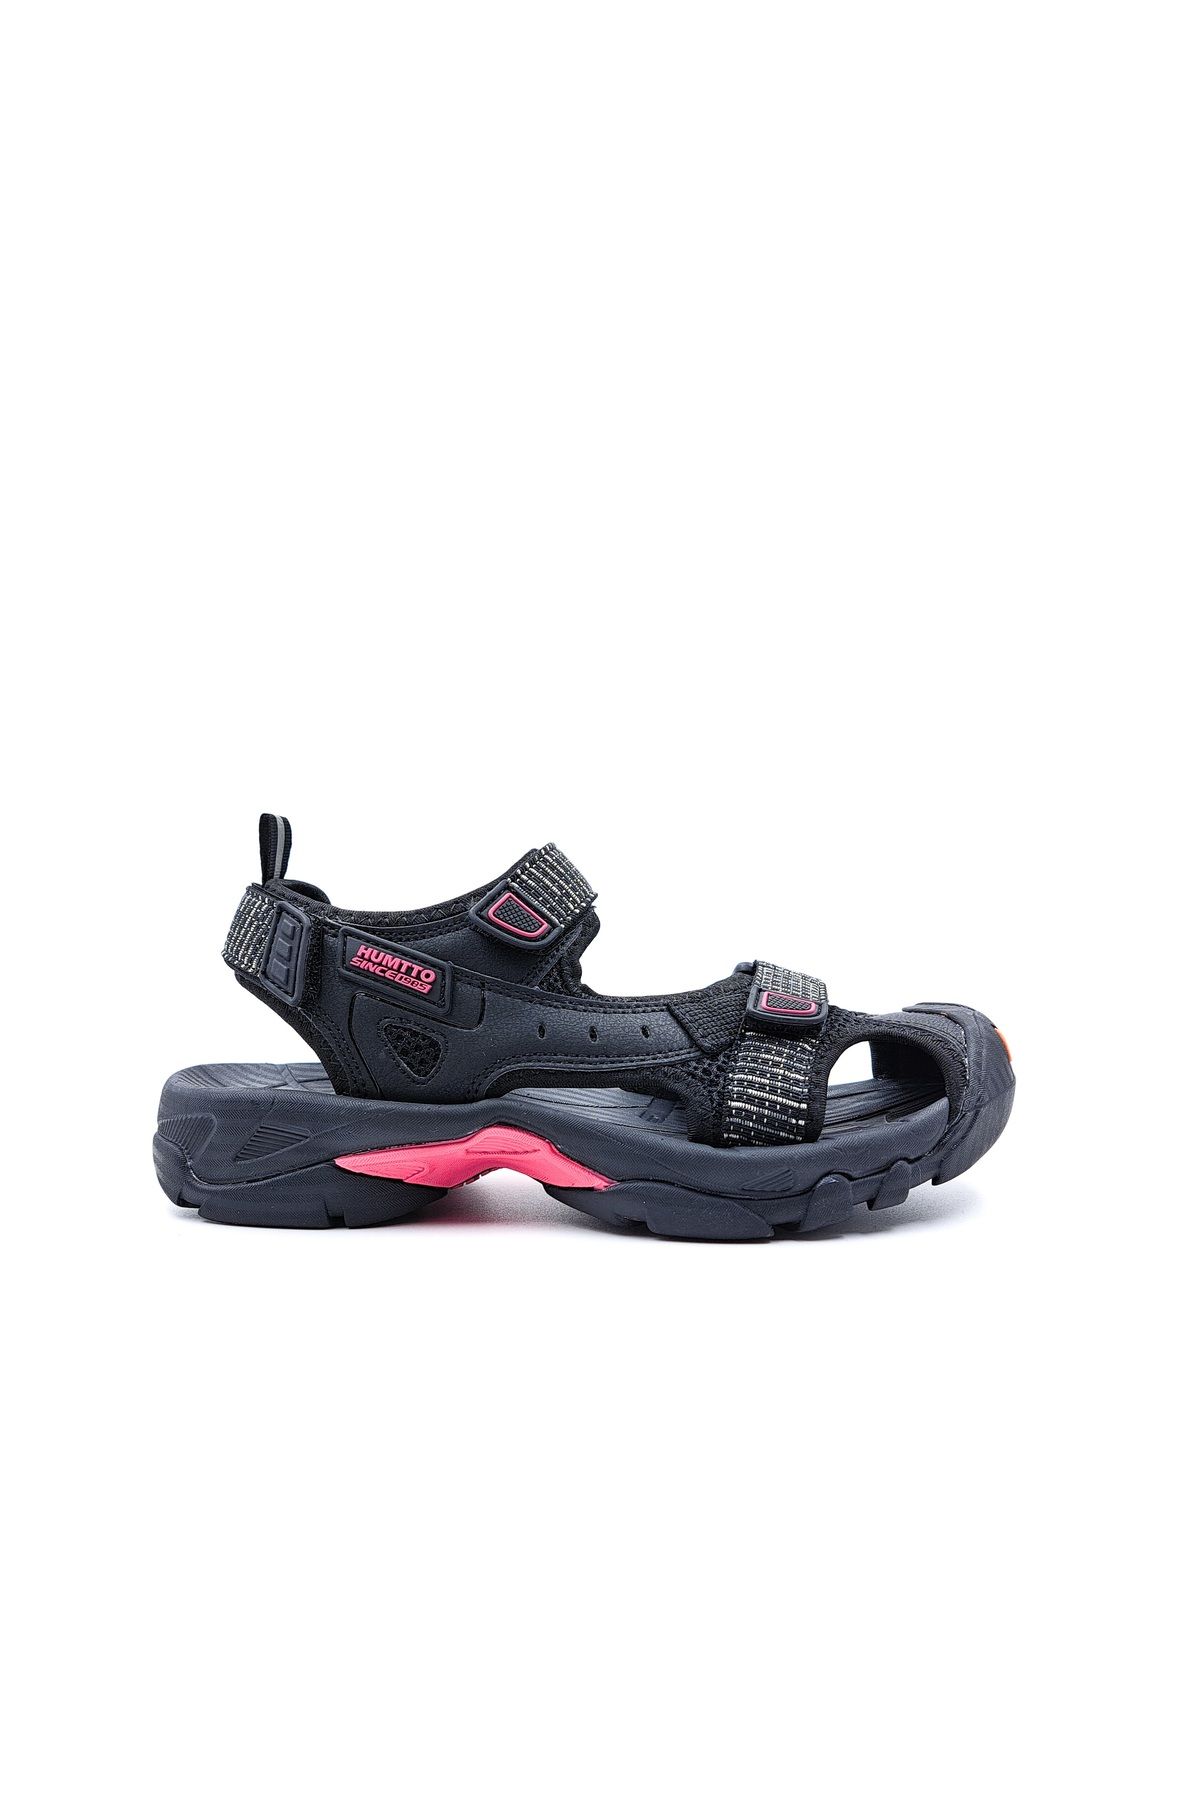 HUMTTO Burnu Kapalı Cırtlı Siyah Kadın Outdoor Trekking Spor Sandalet